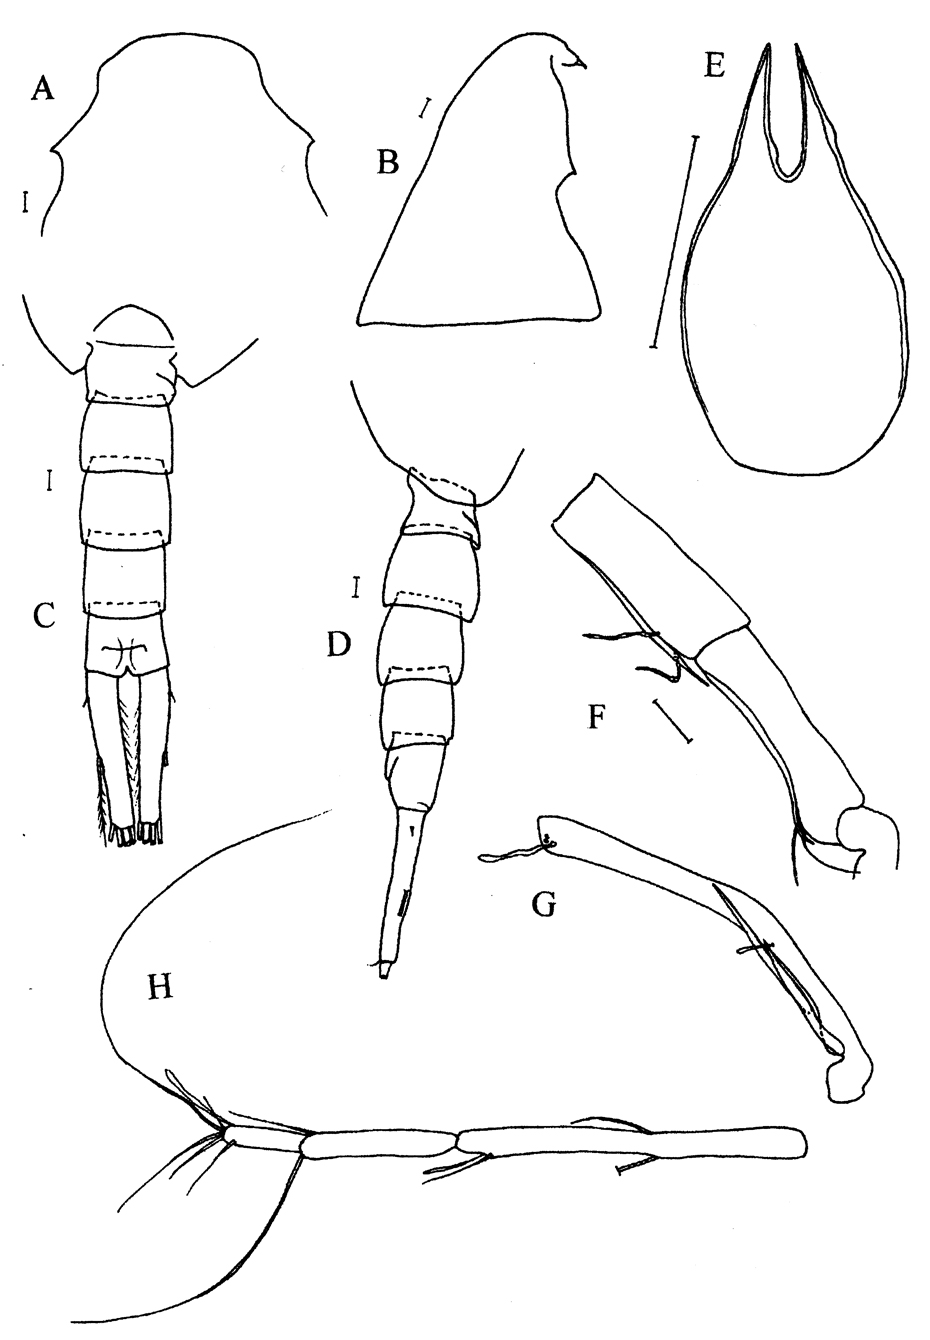 Species Lucicutia hulsemannae - Plate 2 of morphological figures